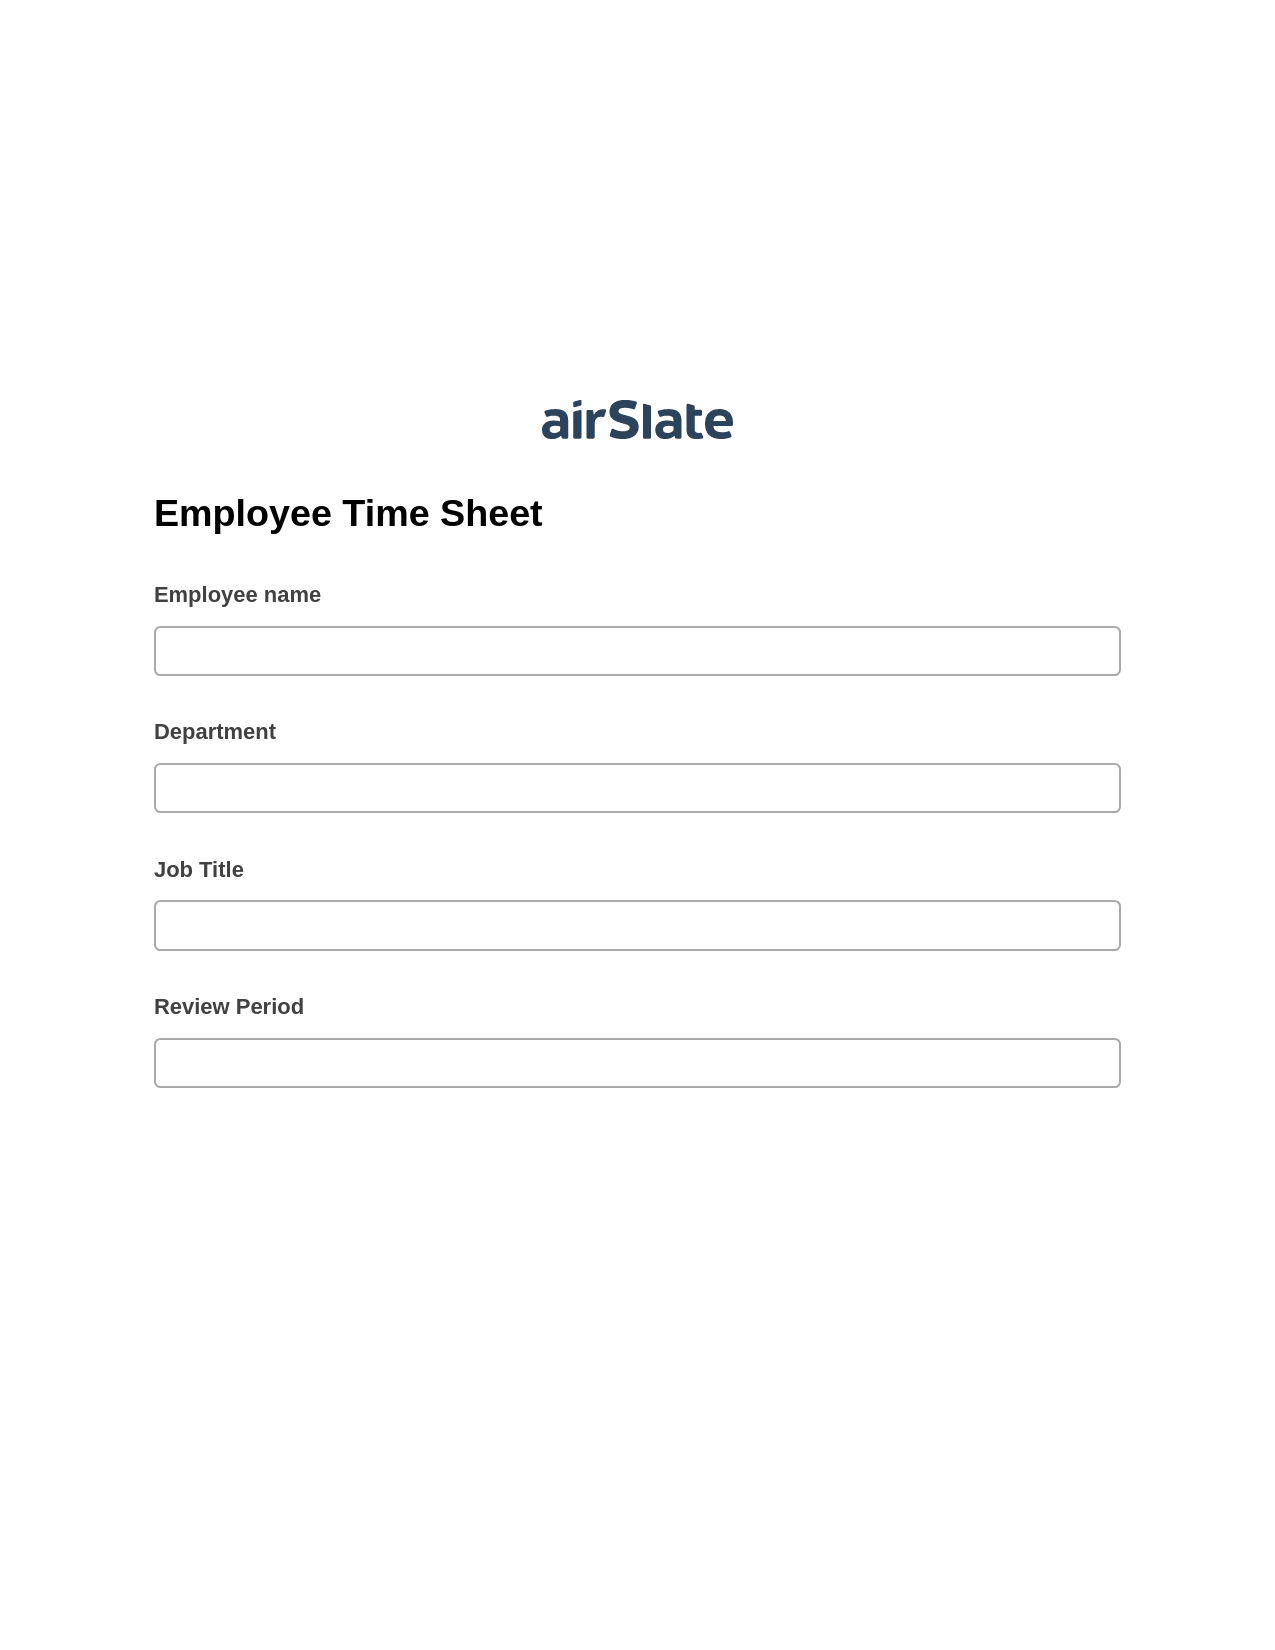 Multirole Employee Time Sheet Pre-fill from CSV File Bot, Rename Slate Bot, Export to WebMerge Bot